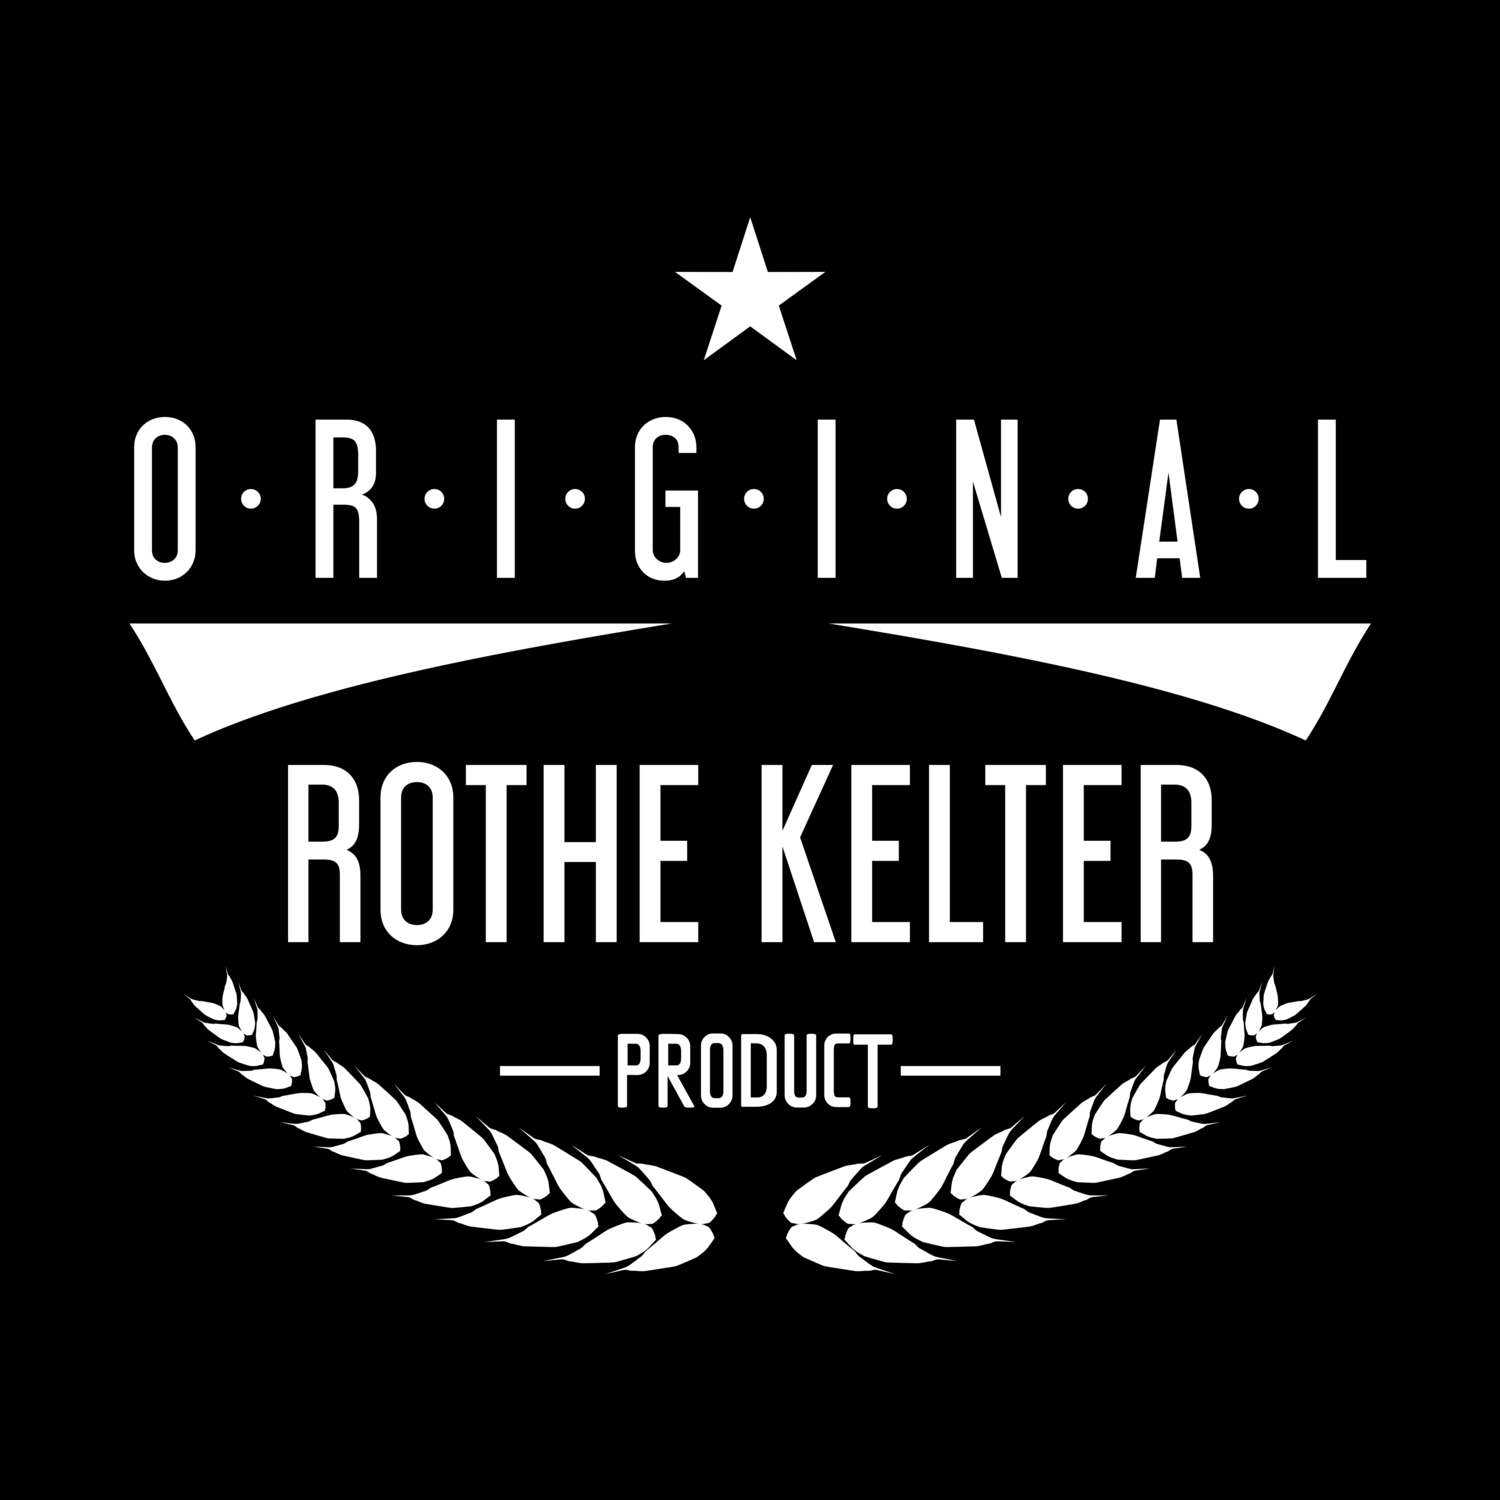 Rothe Kelter T-Shirt »Original Product«